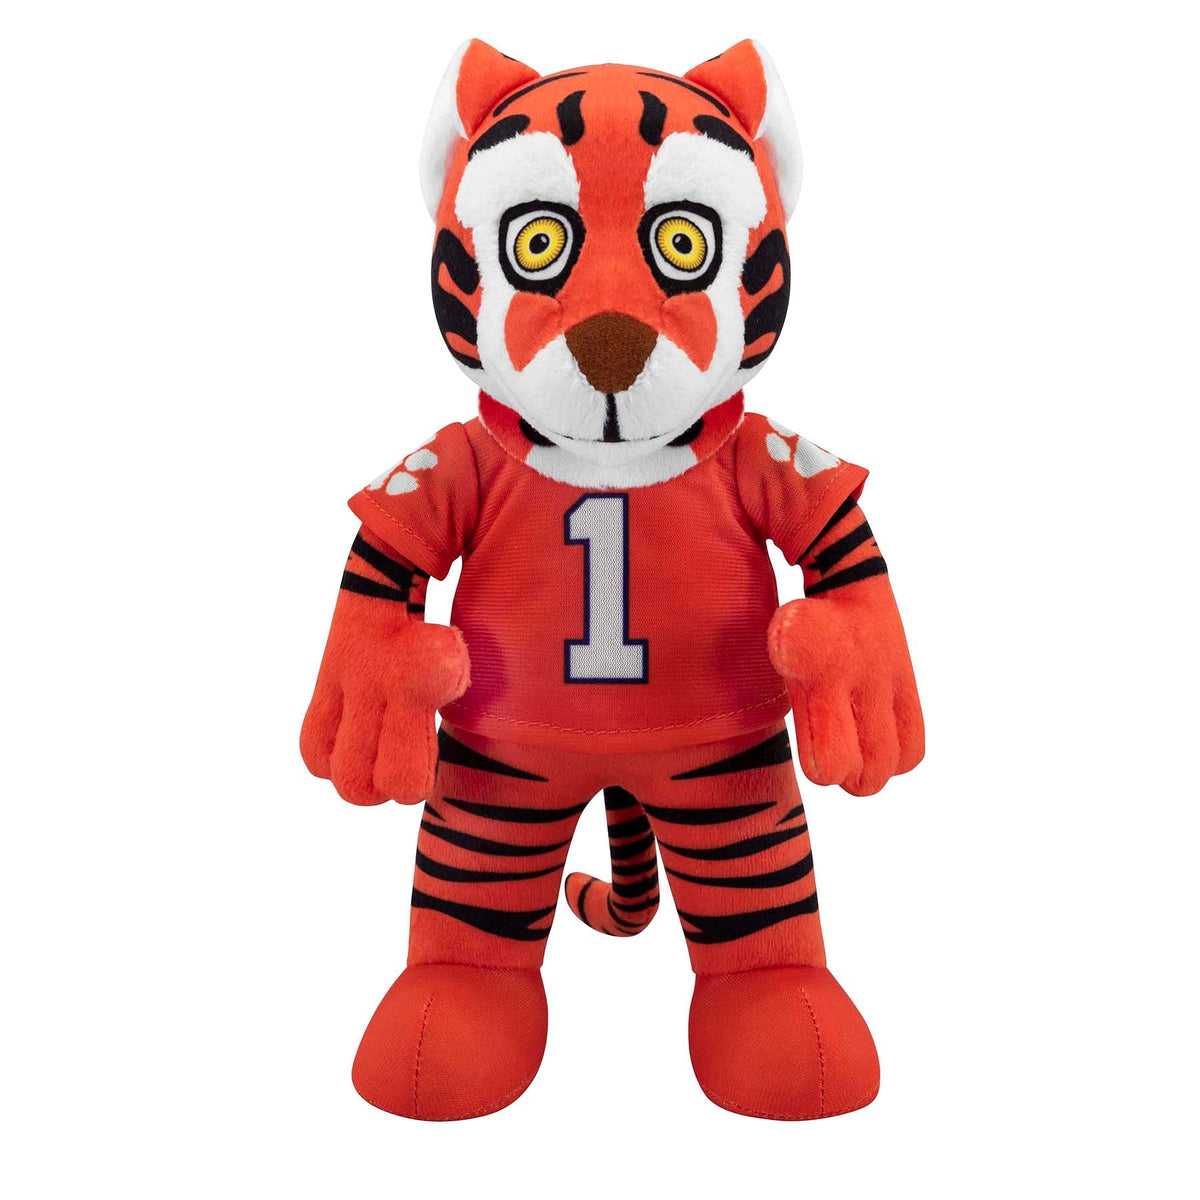 Bleacher Creatures Clemson Tigers The Tiger 10 Mascot Plush